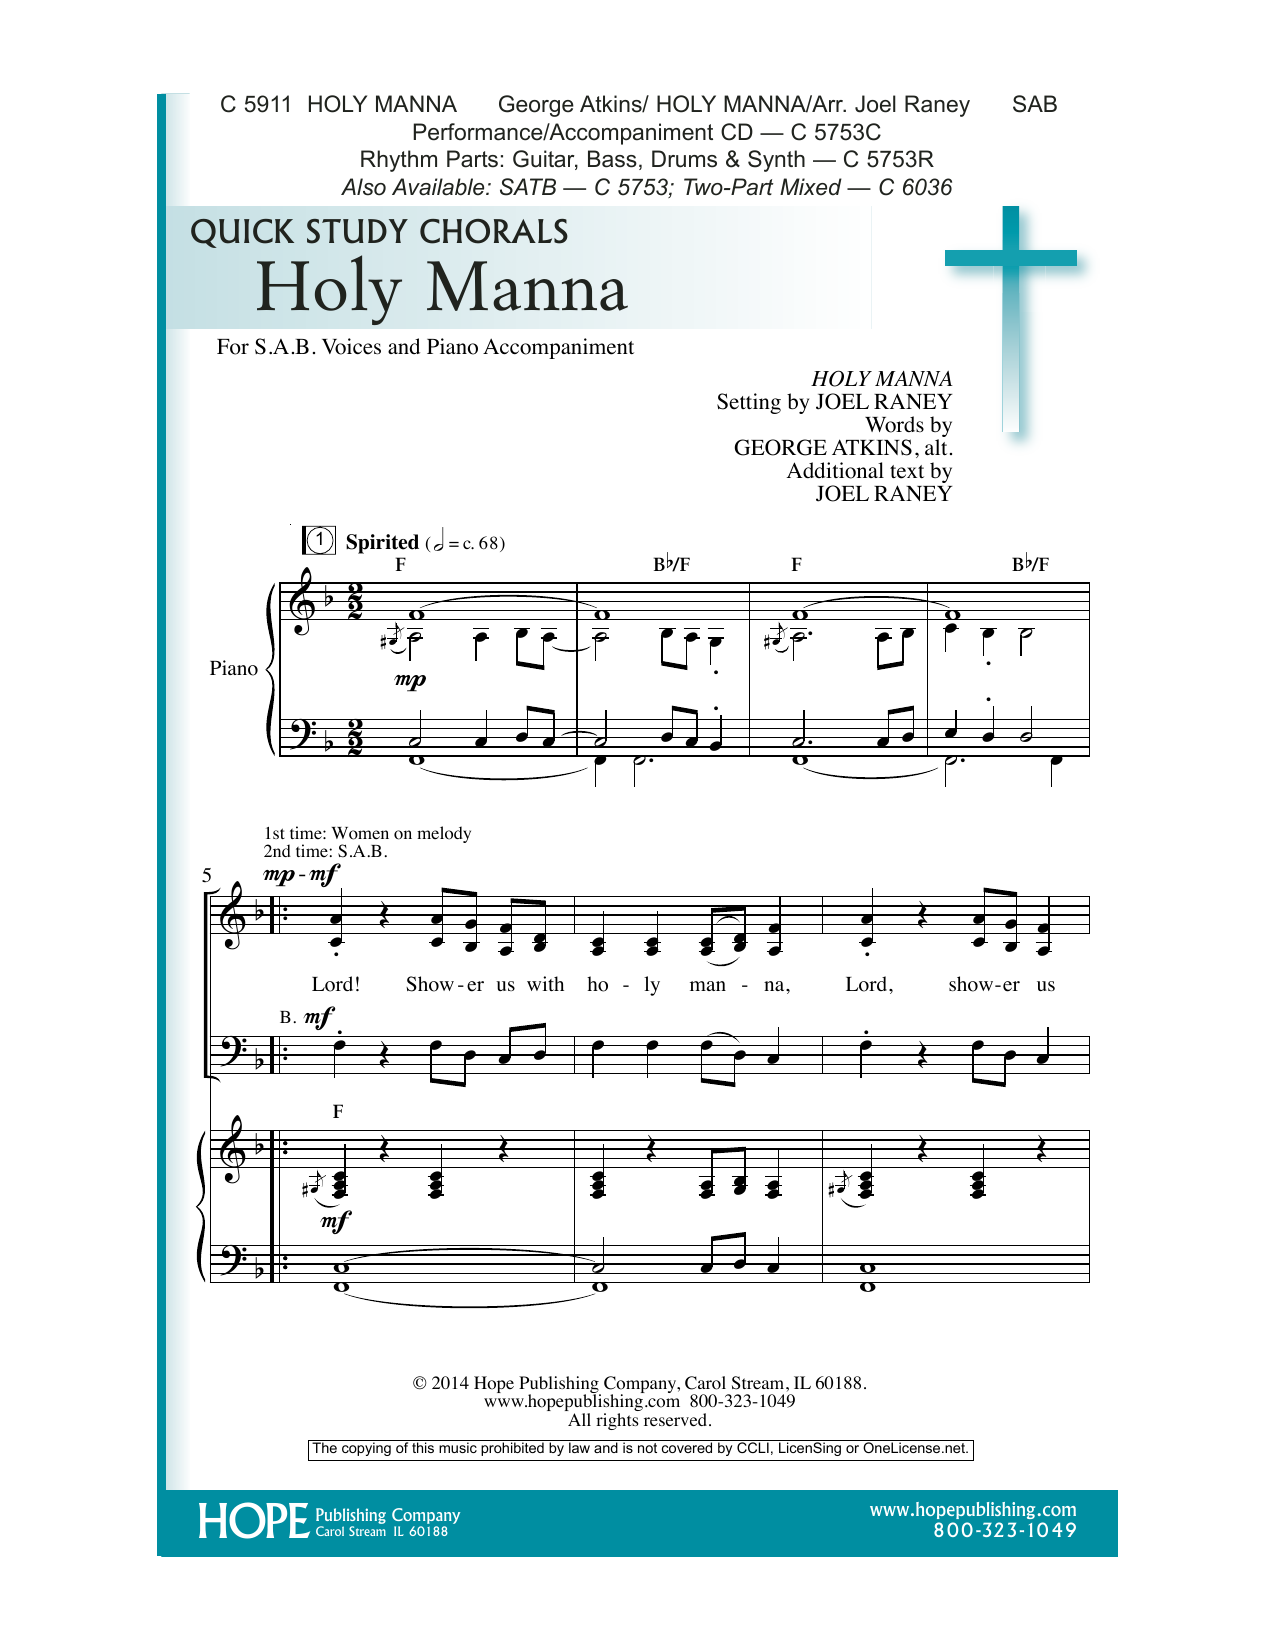 Download Joel Raney Holy Manna Sheet Music